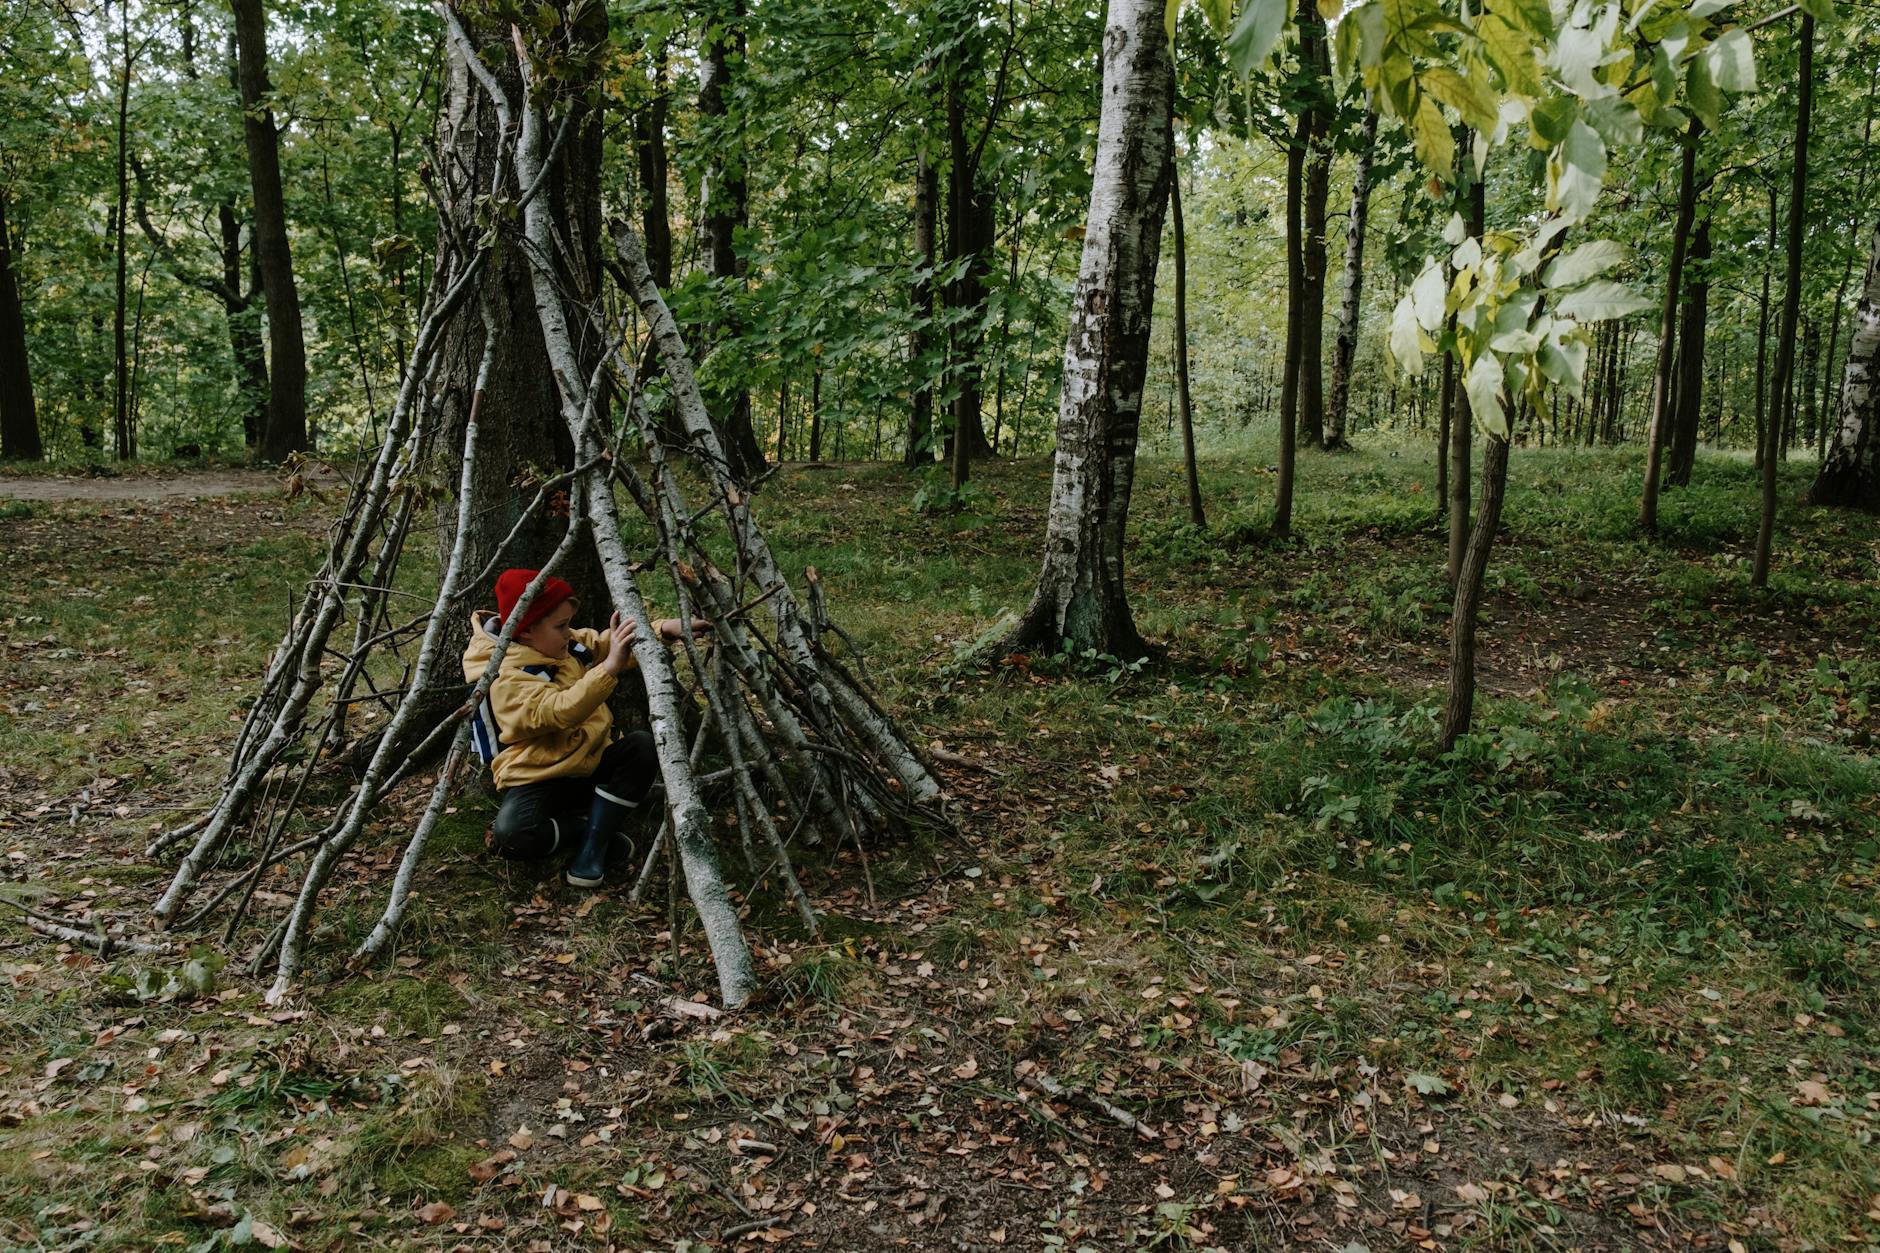 A Boy Hiding Behind the Wooden Sticks